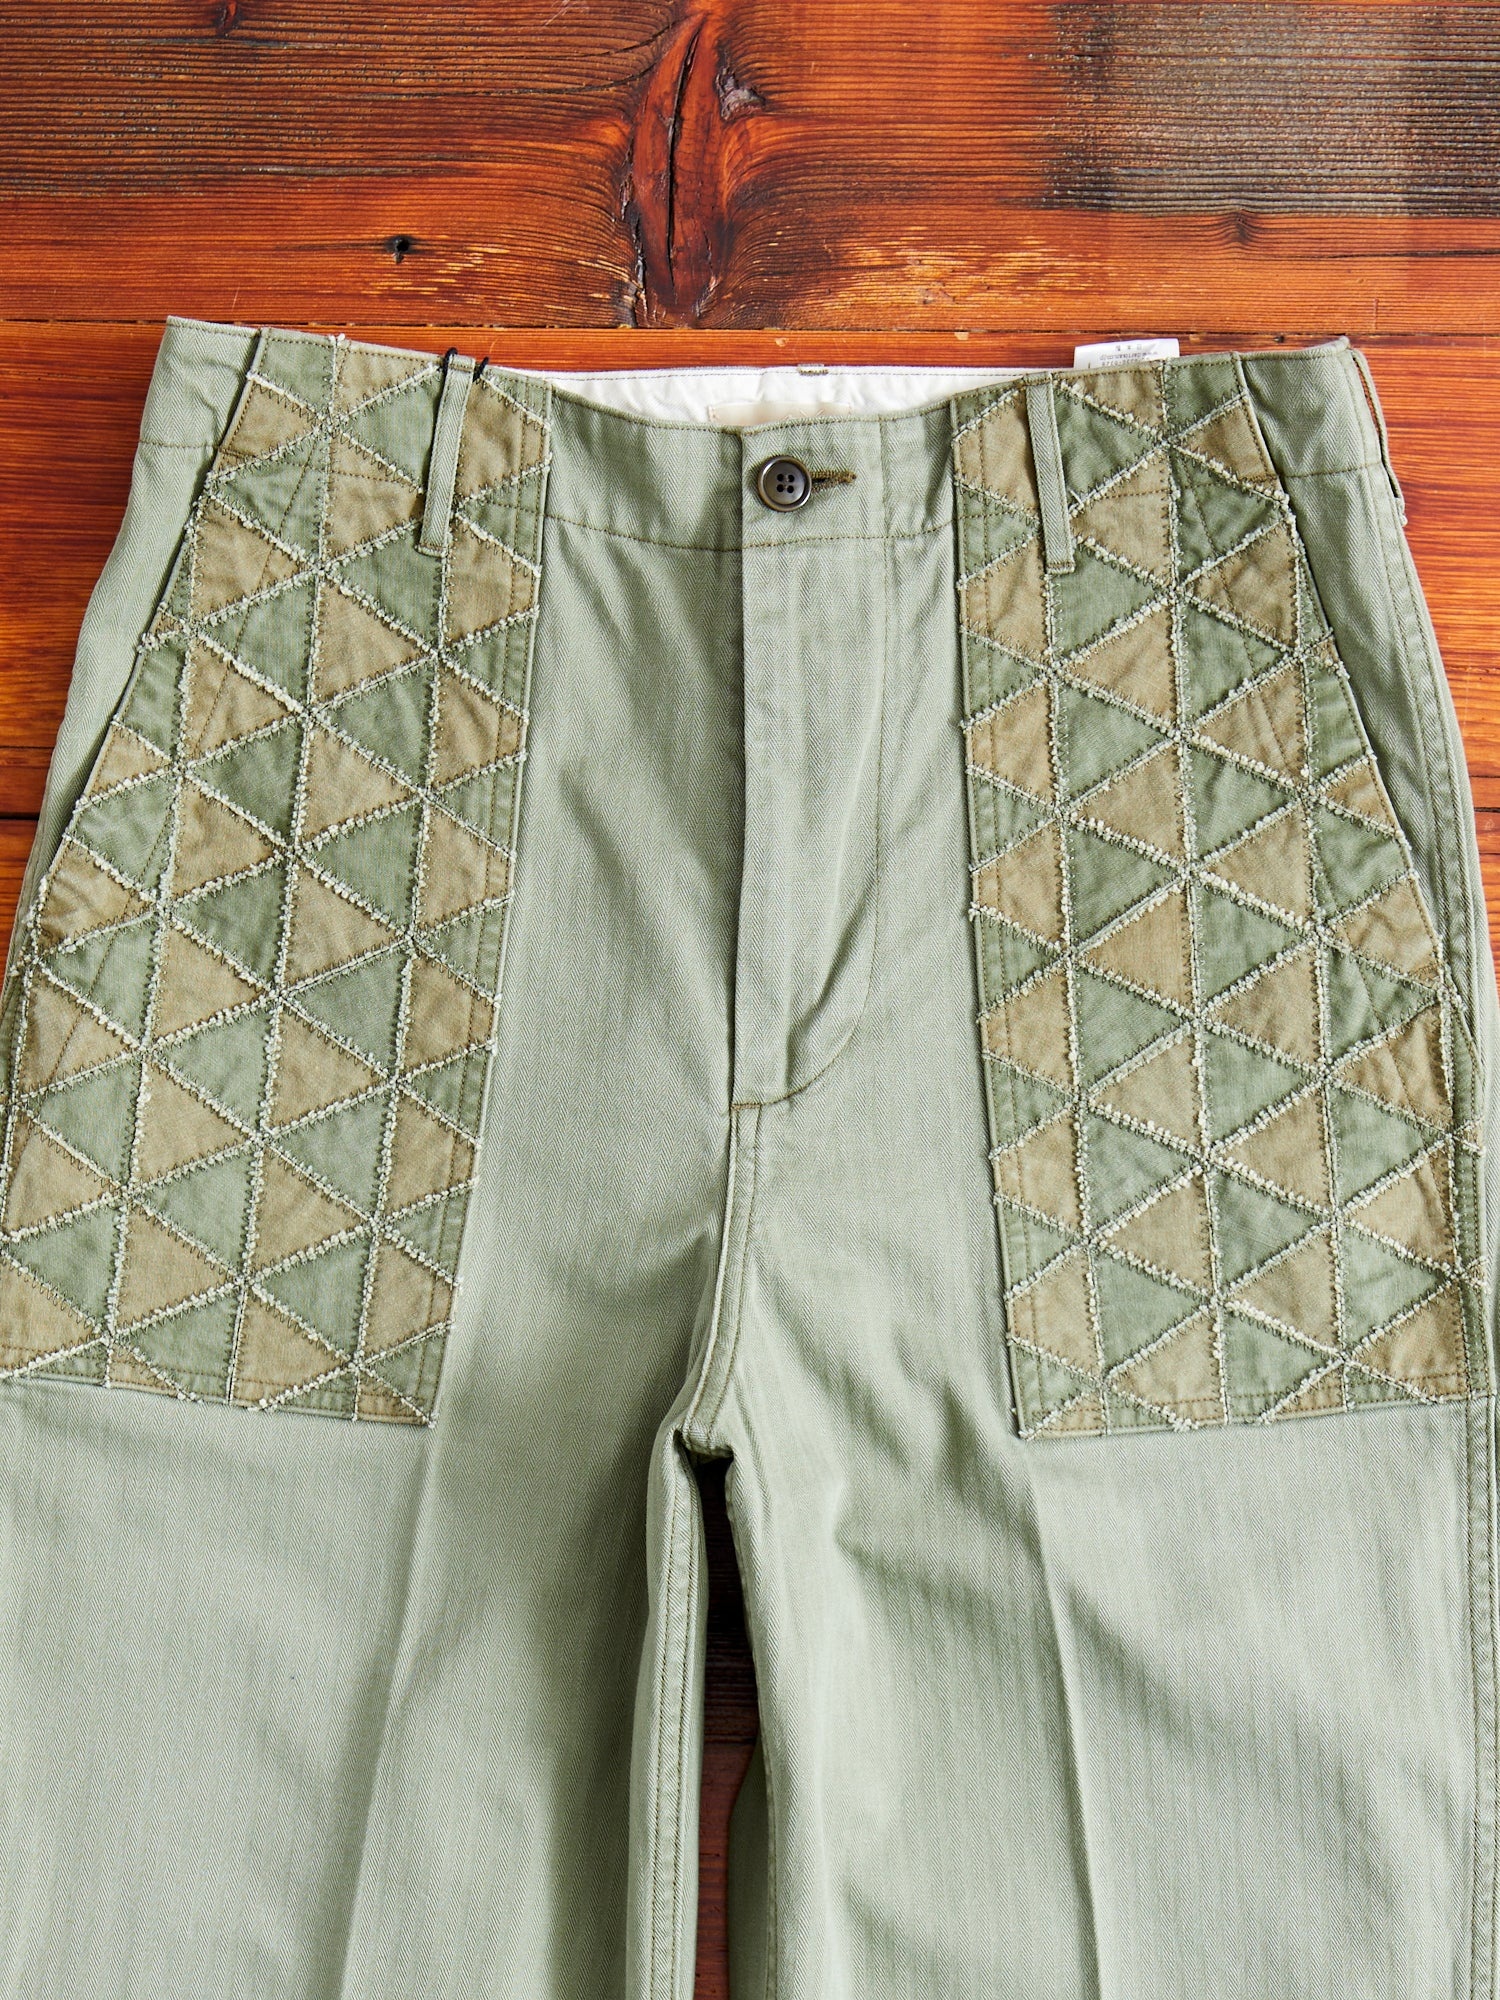 MSP-1014 Tsugihagi Baker Pants in Army Green - 3